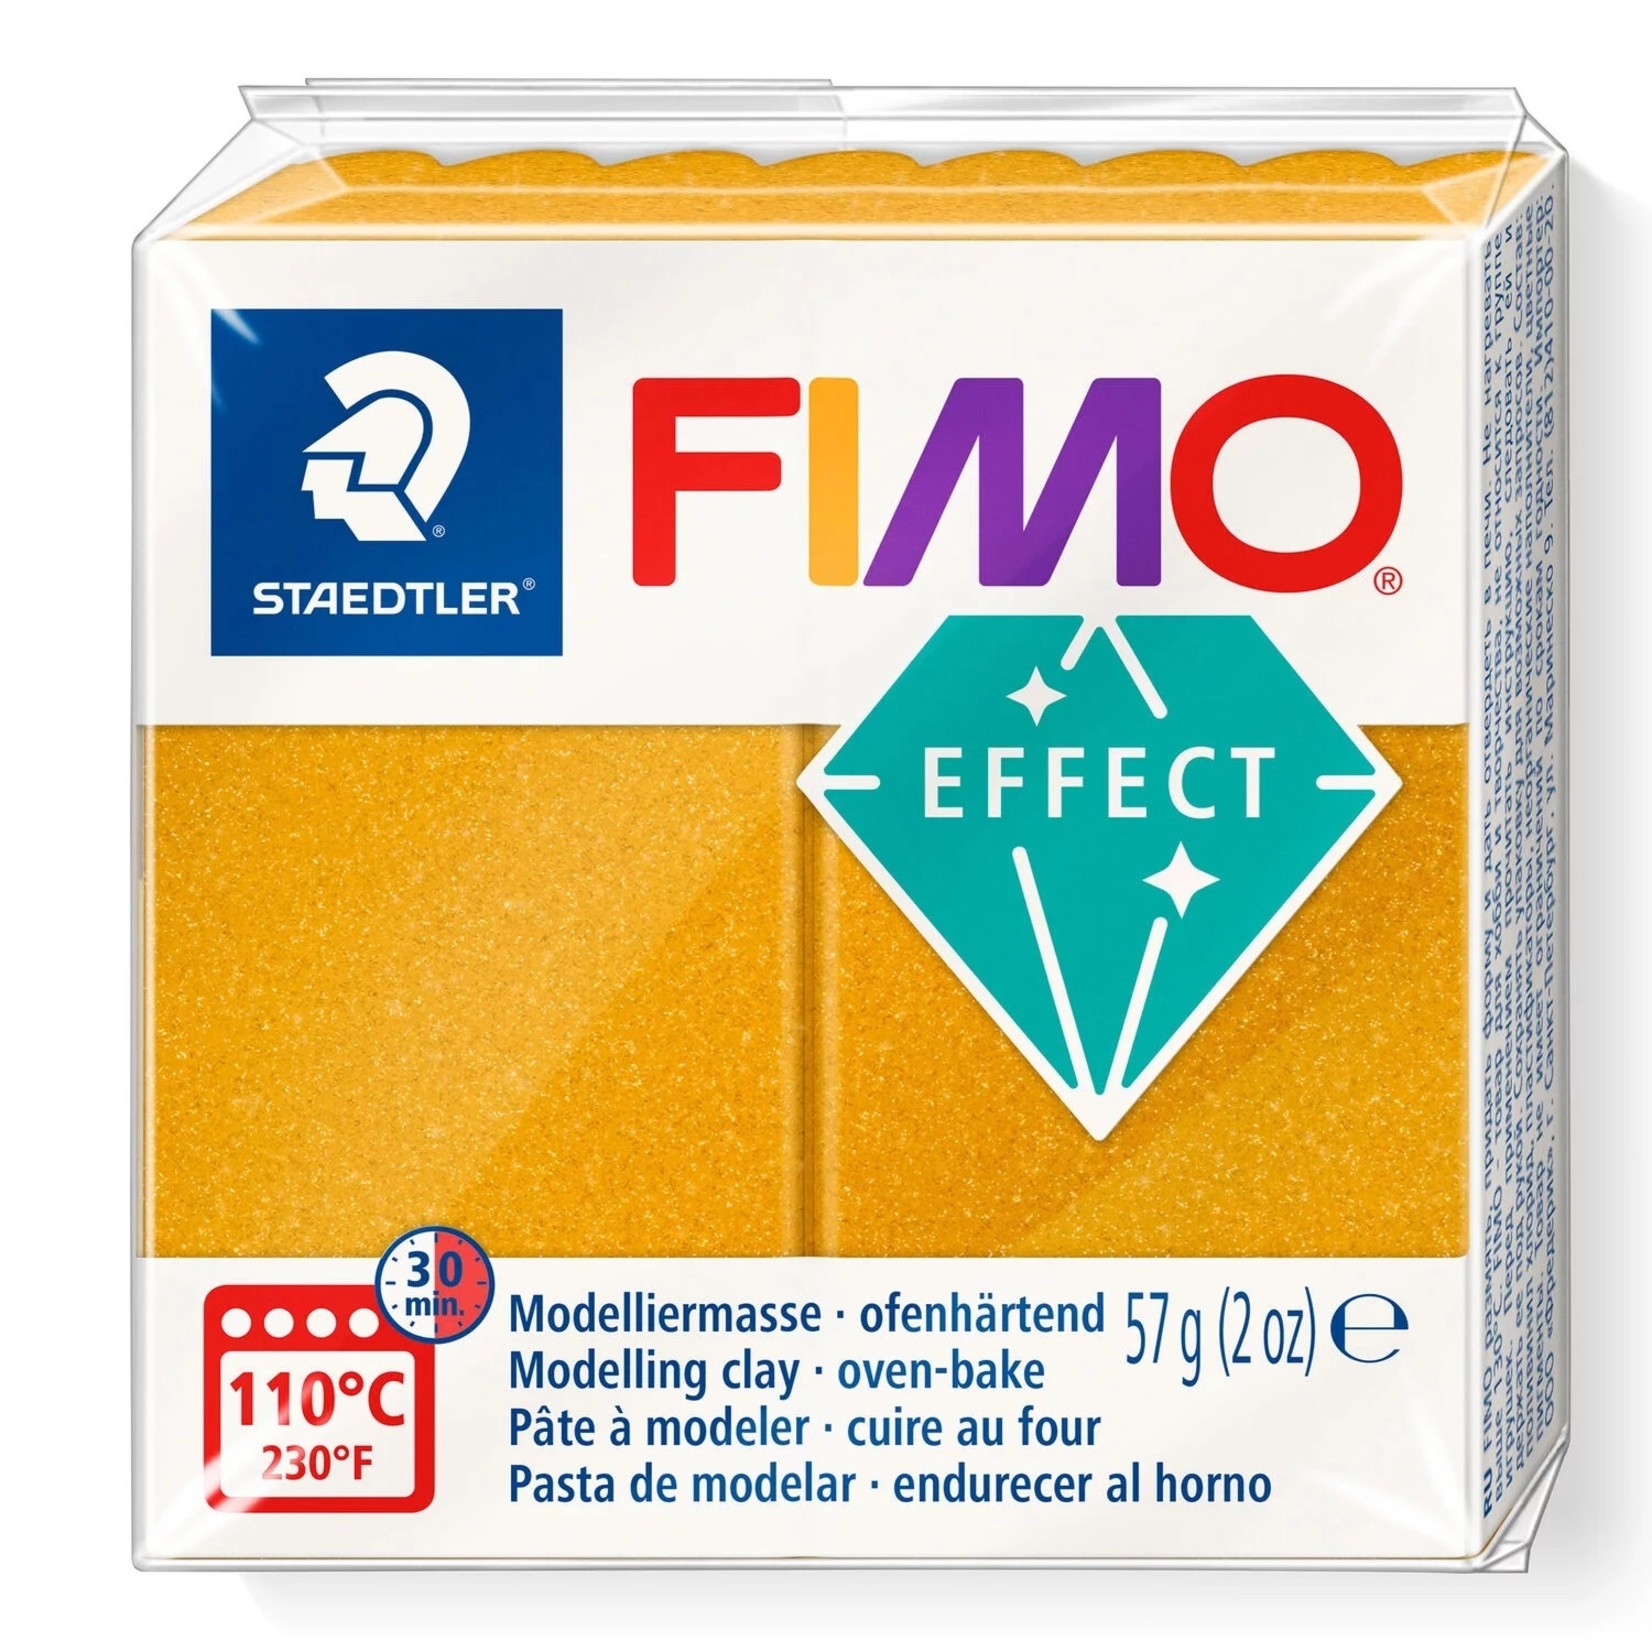 STAEDTLER FIMO EFFECT METALLIC 11 GOLD